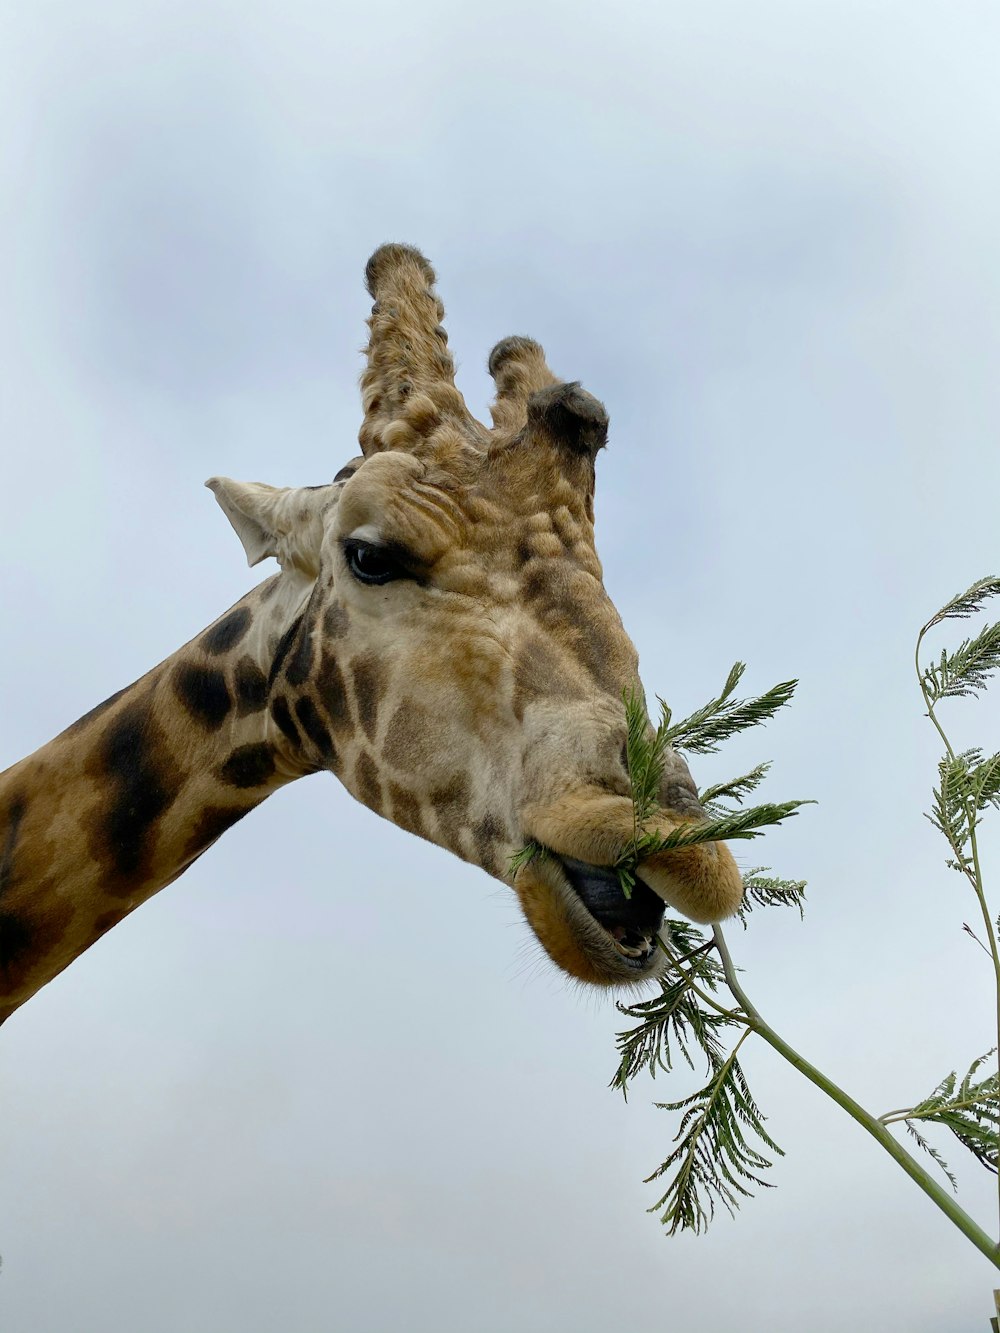 giraffe under white cloudy sky during daytime